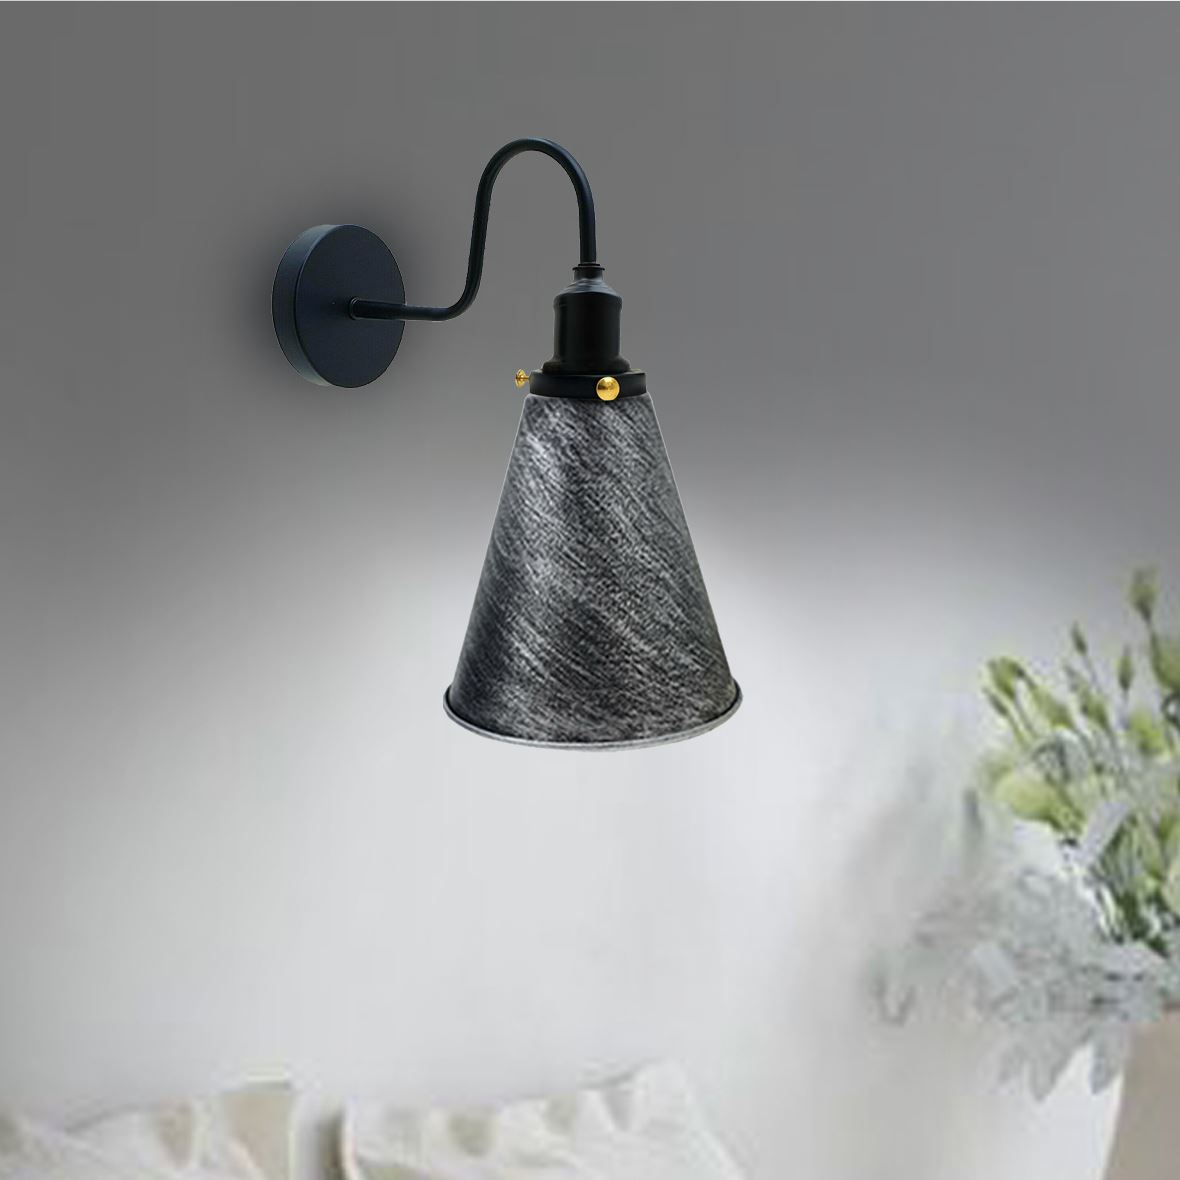 Retro Industrial Wall Mounted Vintage Wall Designer Indoor Light Fixture Lamp Fitting~3387 - LEDSone UK Ltd